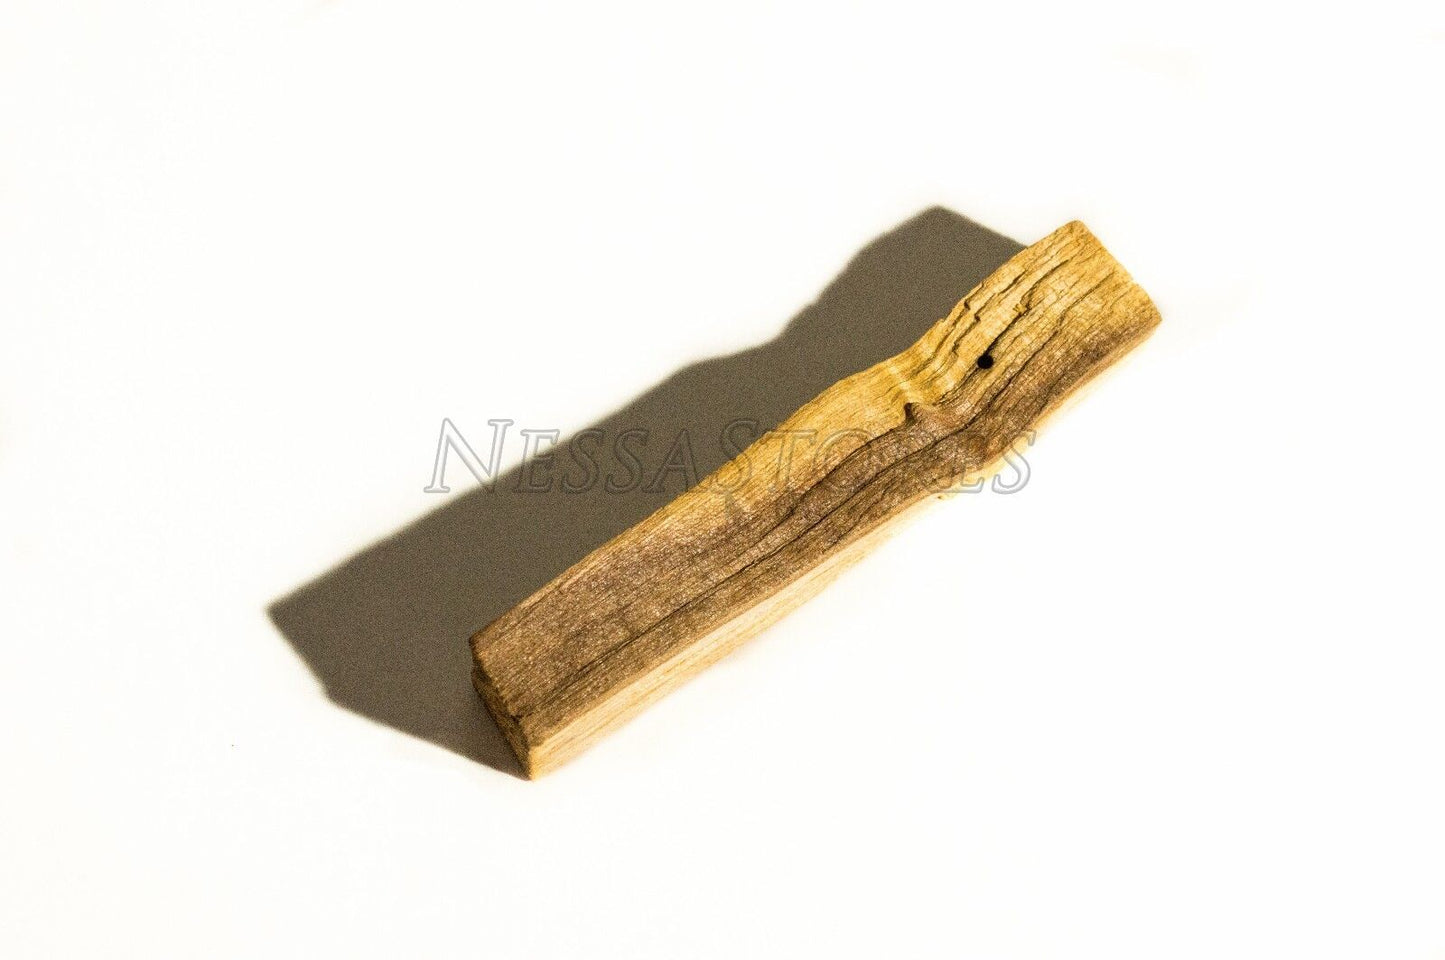 NessaStores Palo Santo Holy Wood Incense Sticks Peruvian ( 25 pcs) #JC-65